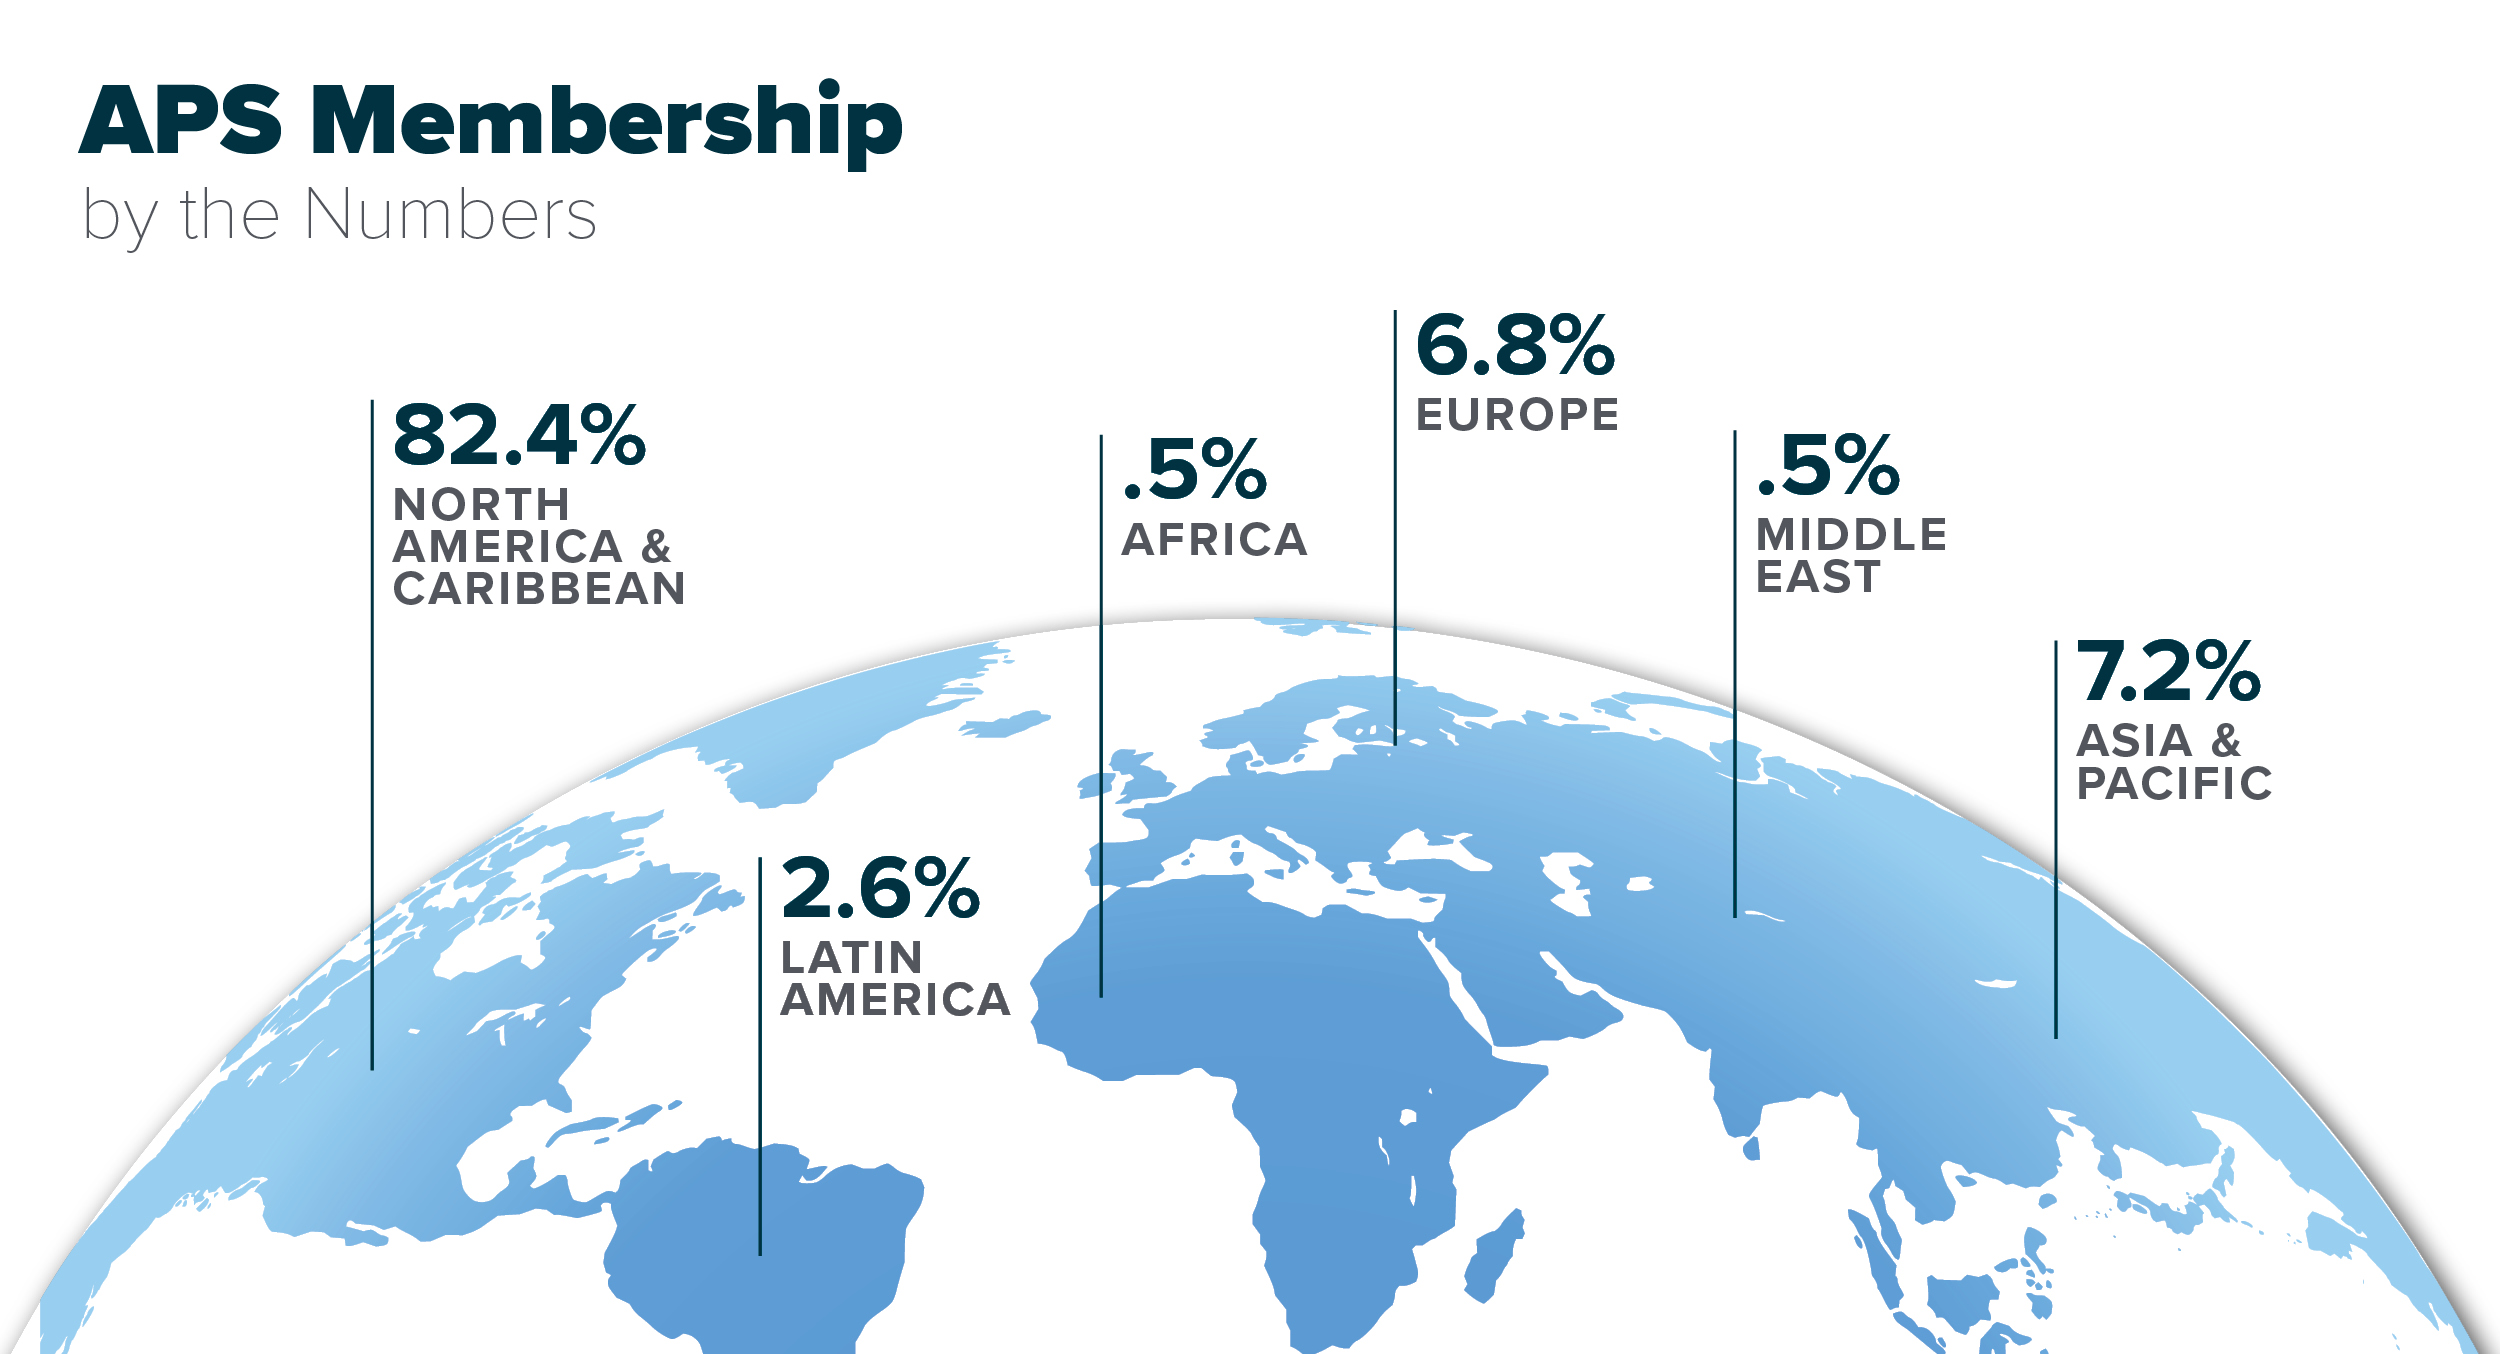 Membership across the globe